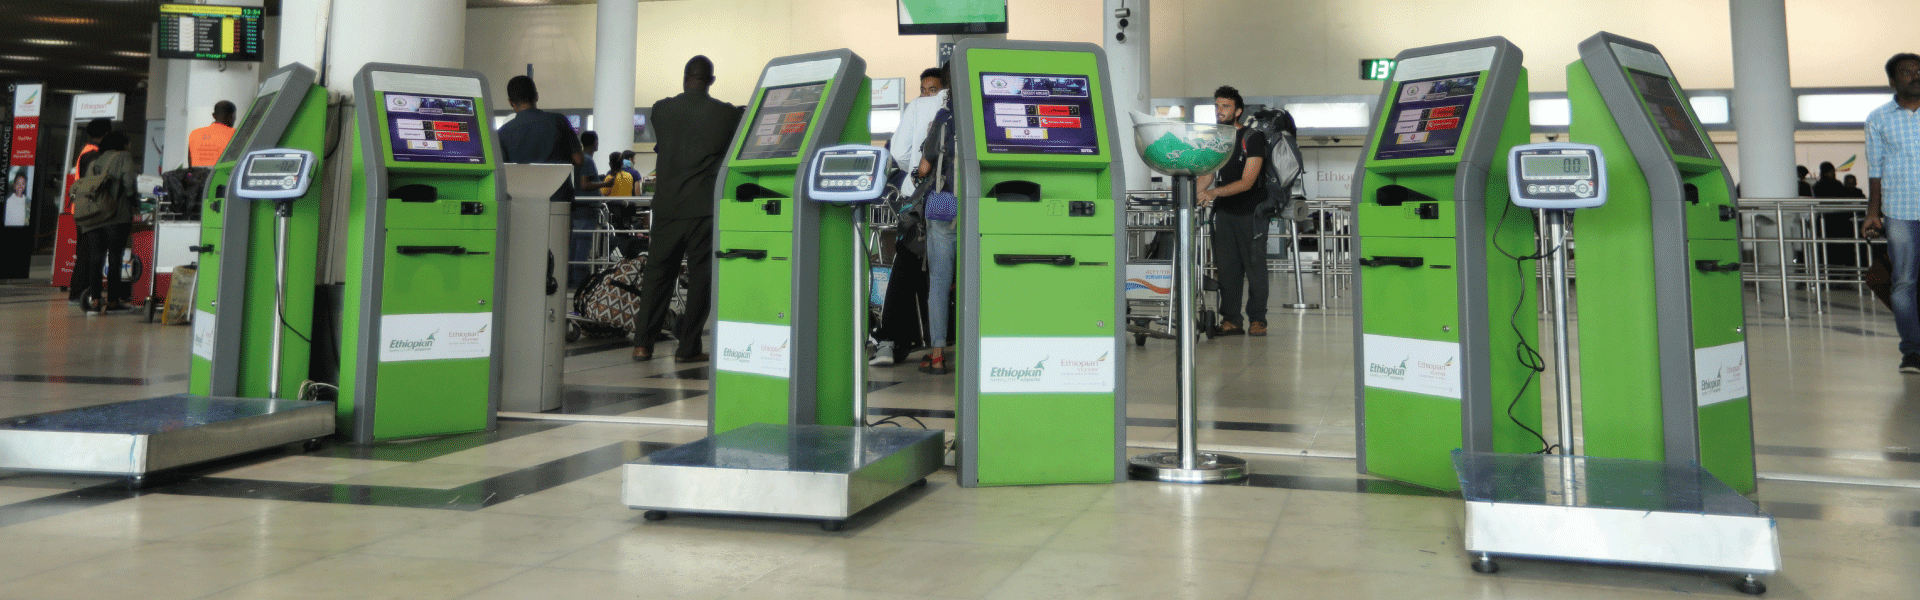 Ethiopian Airlines Check-in Kiosk